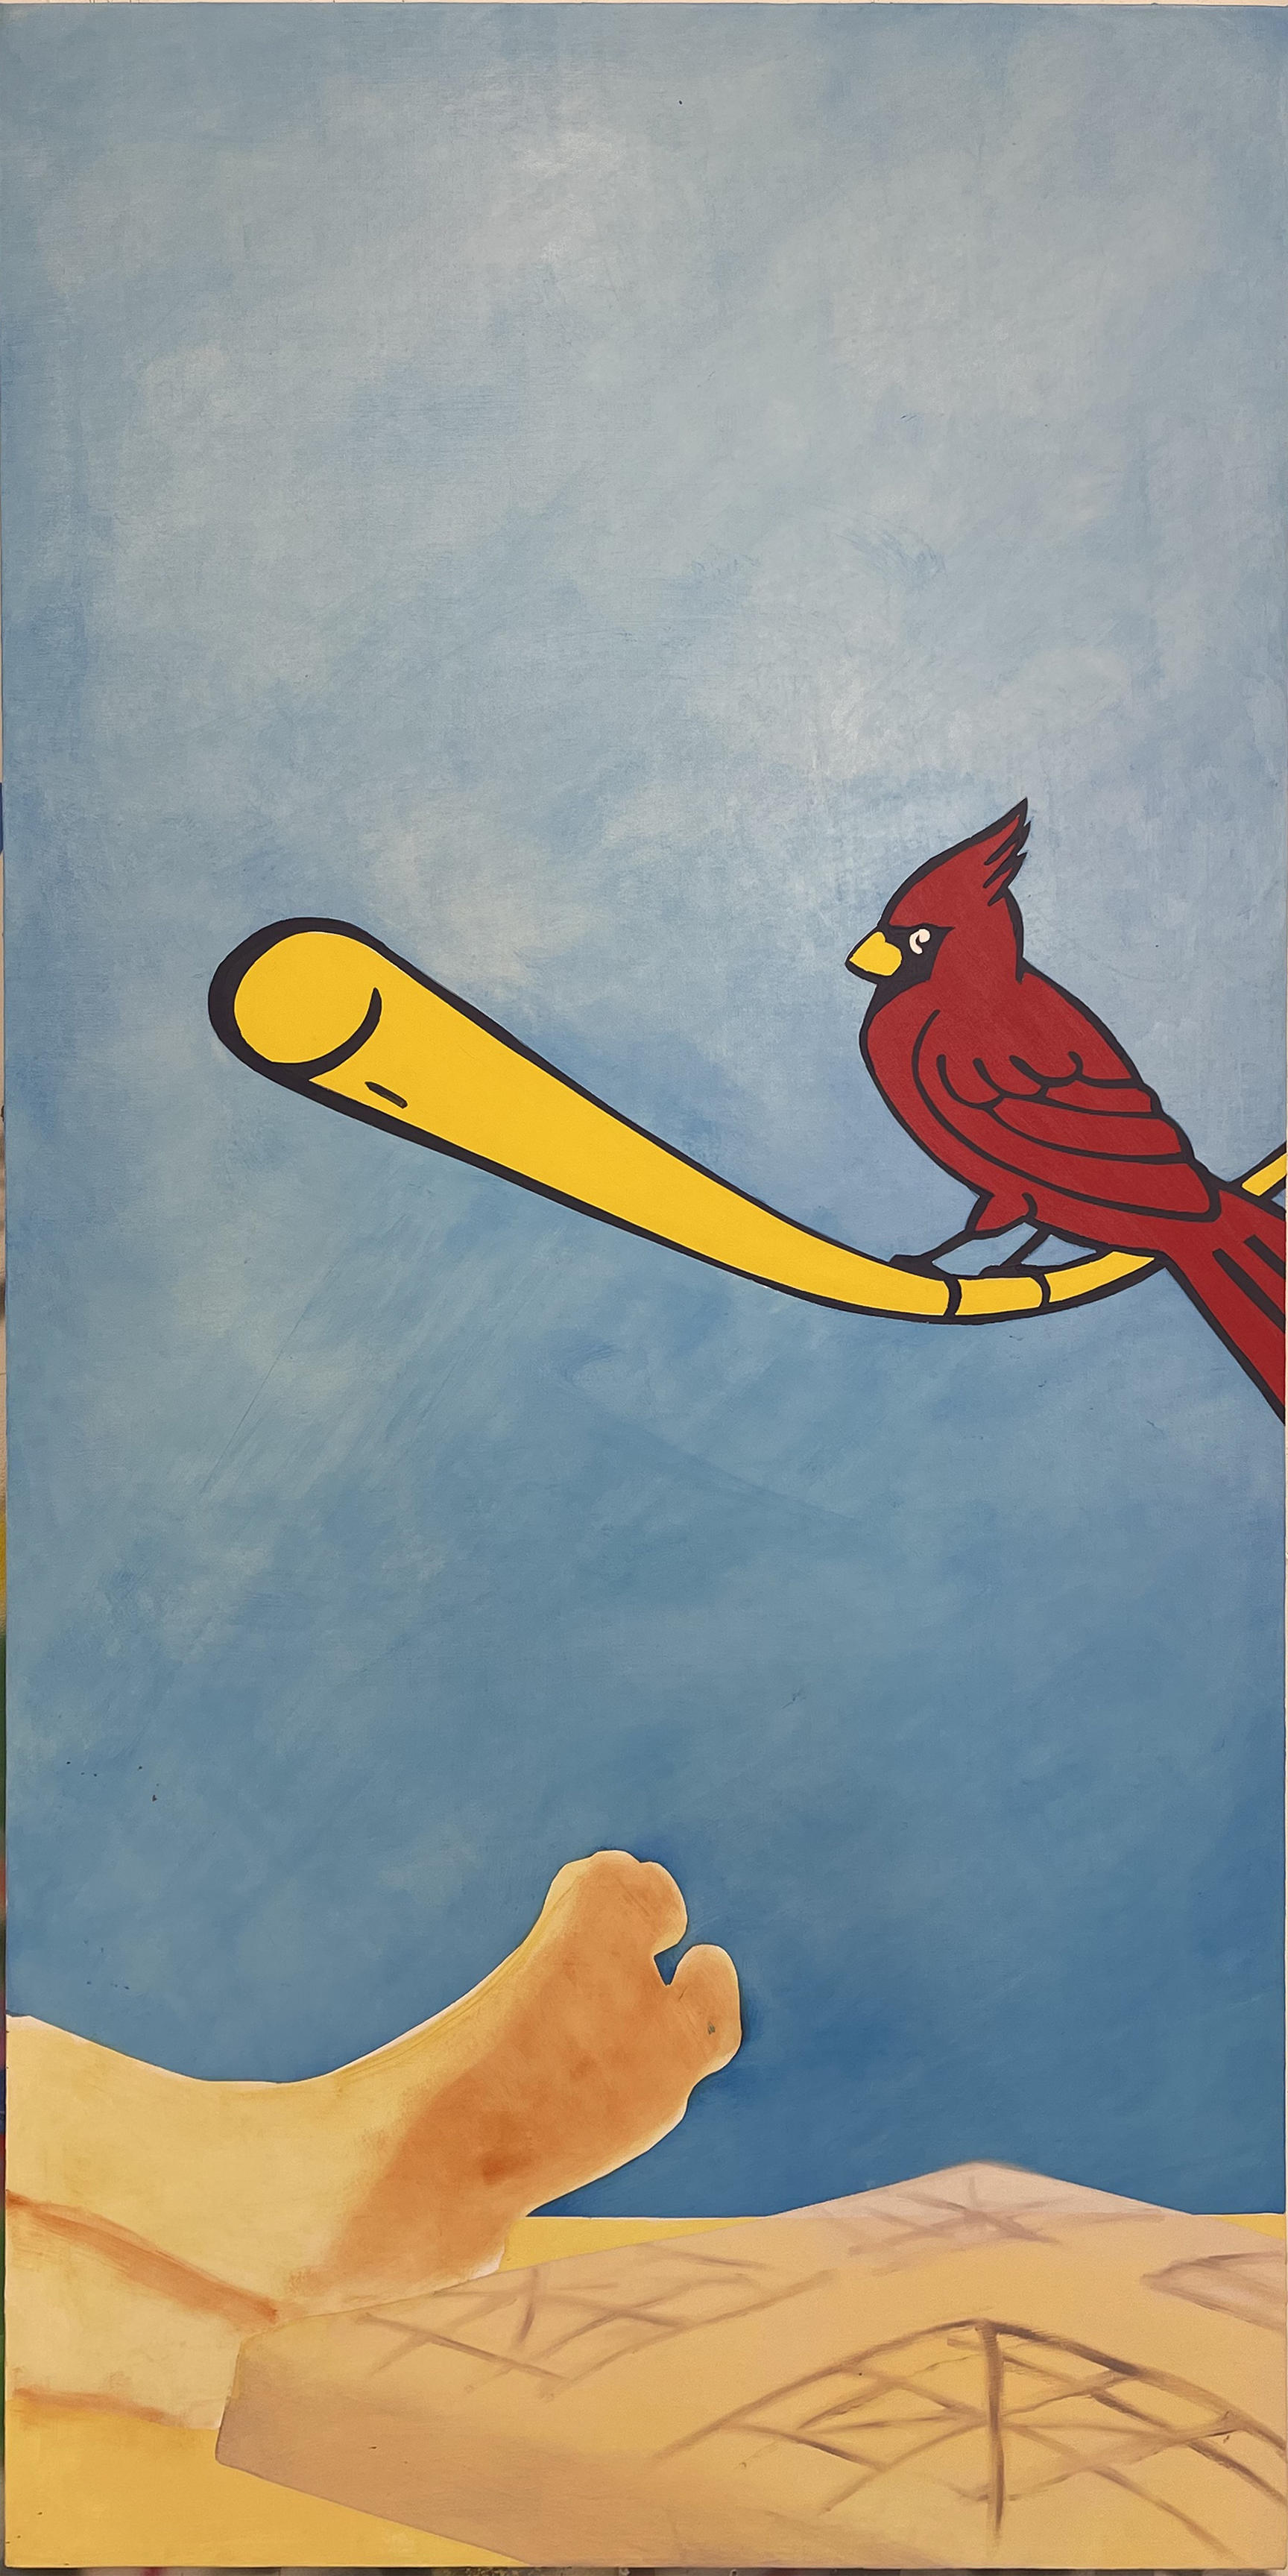 a foot and a cardinal perched on a baseball bat